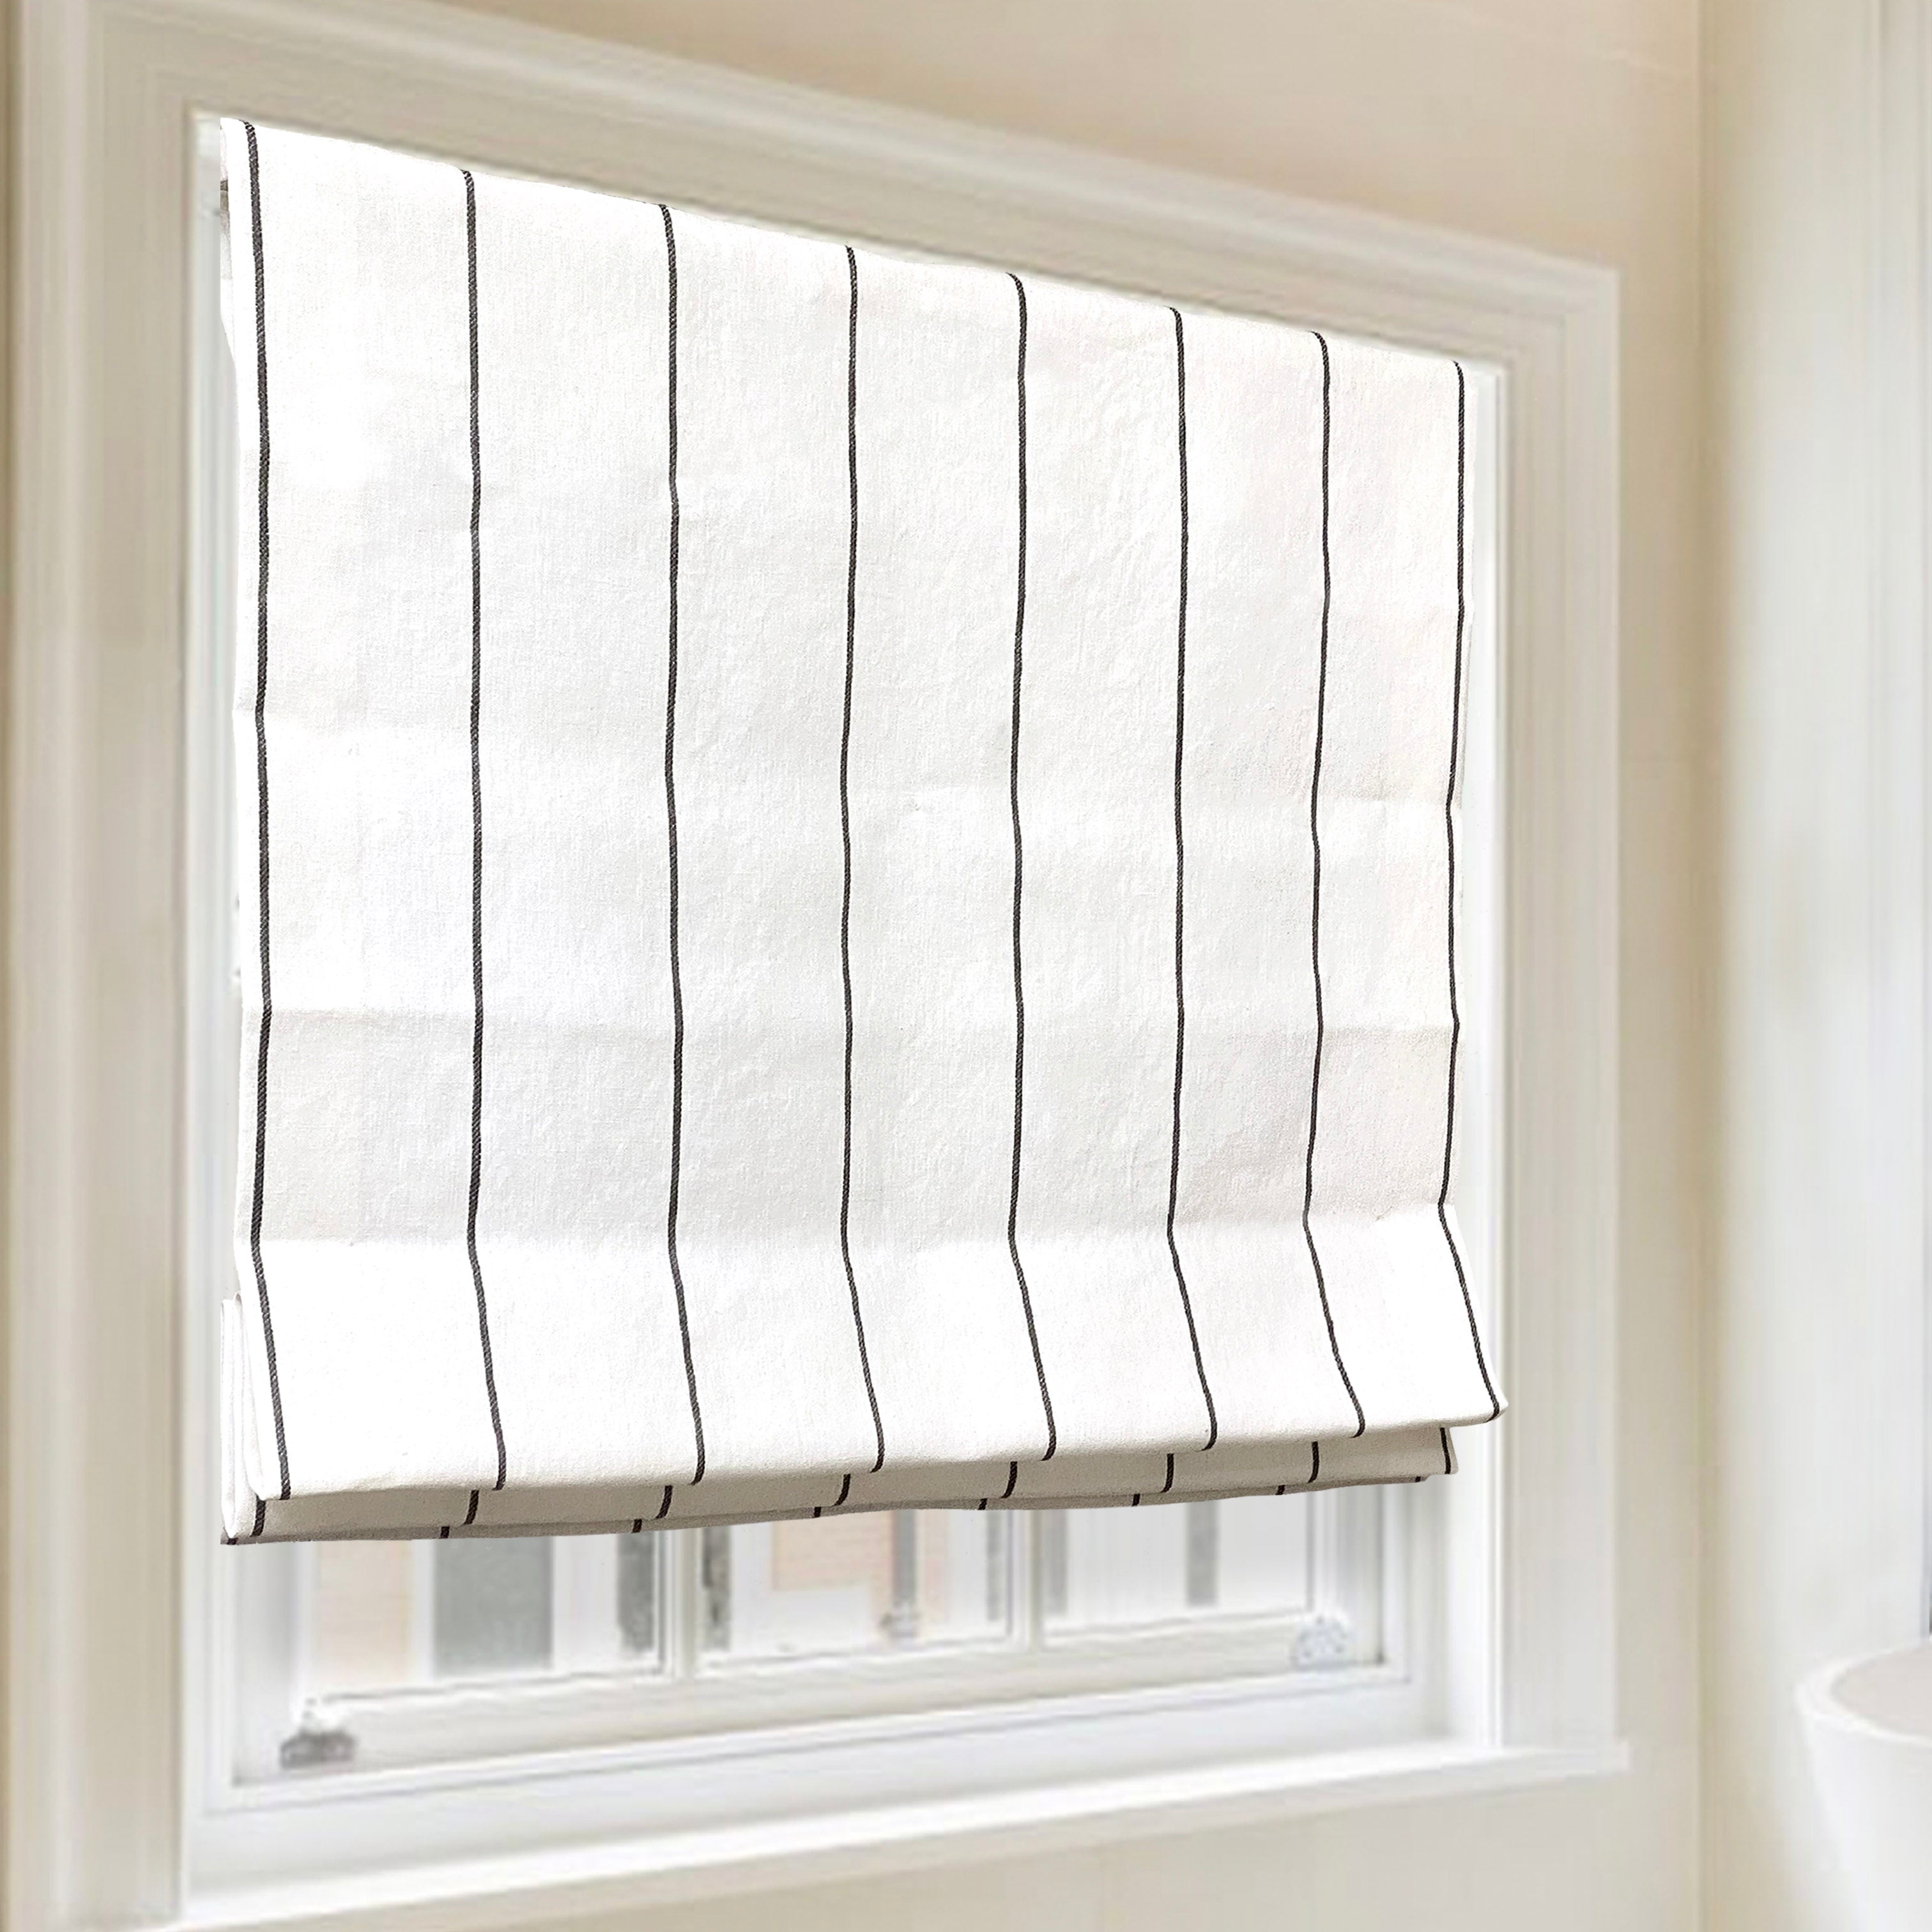 Wide Thin striped linen flat roman shade on the window.